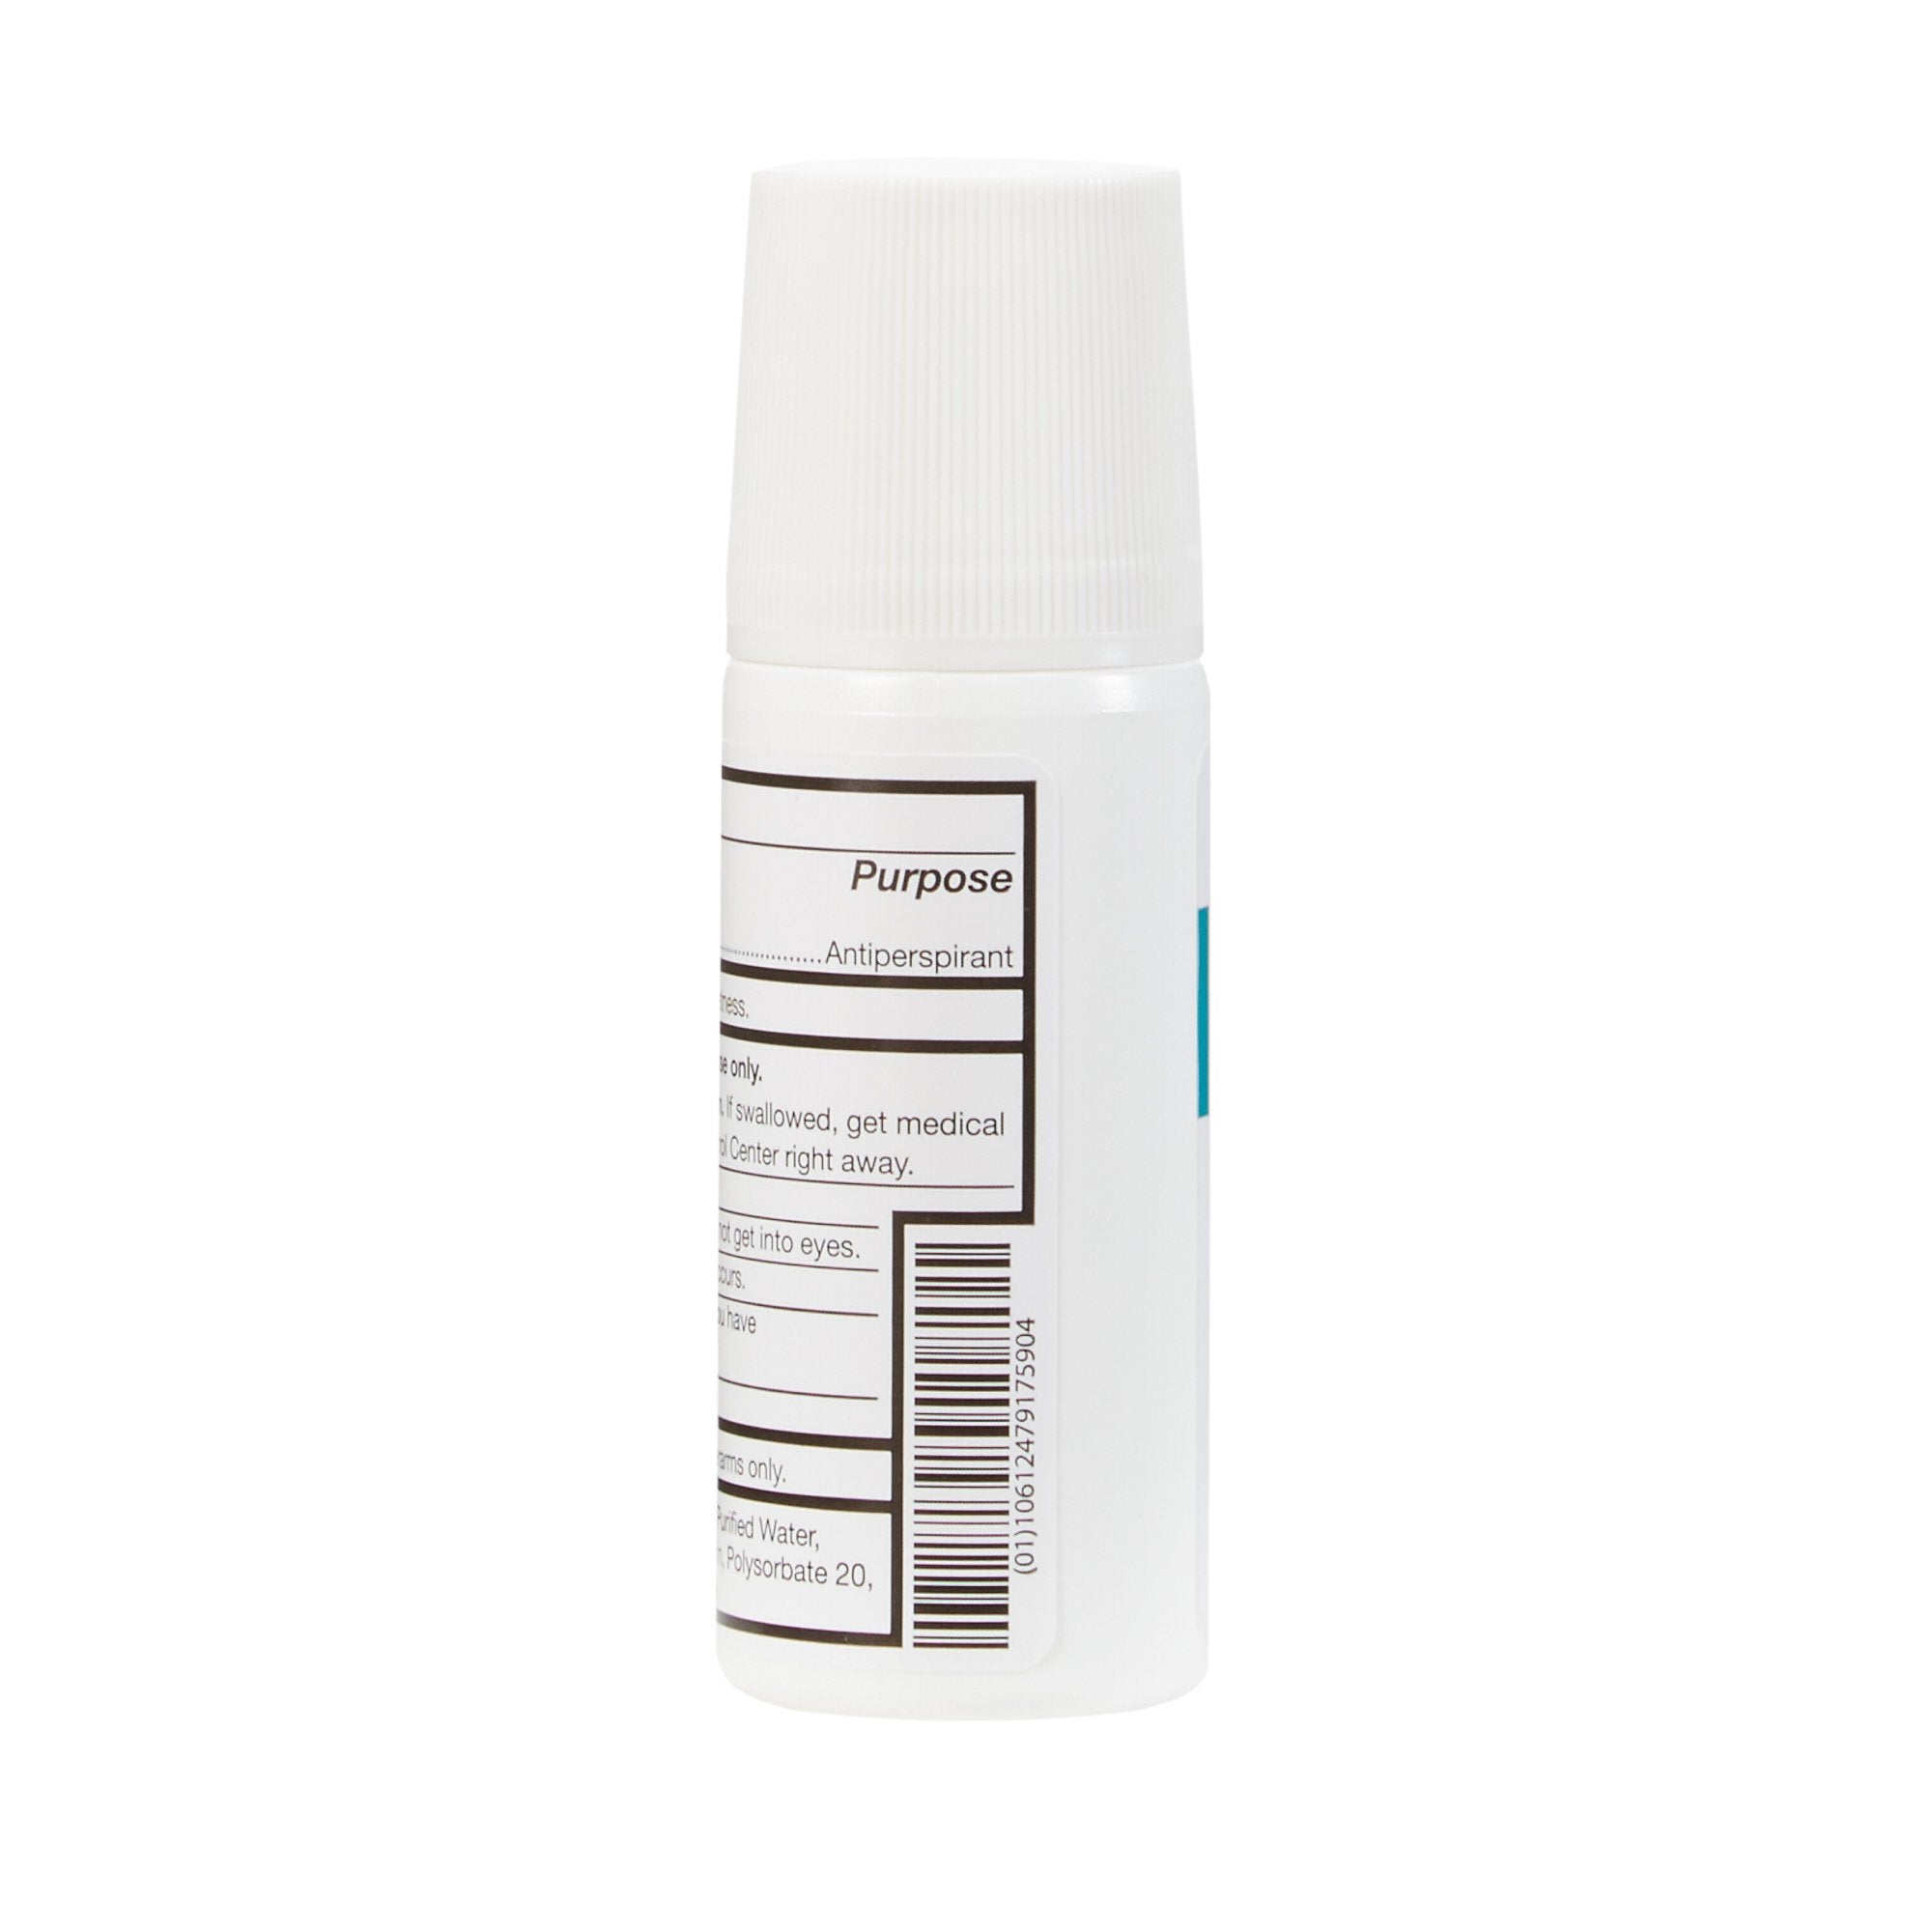 Antiperspirant / Deodorant McKesson Roll-On 1.5 oz. Fresh Scent